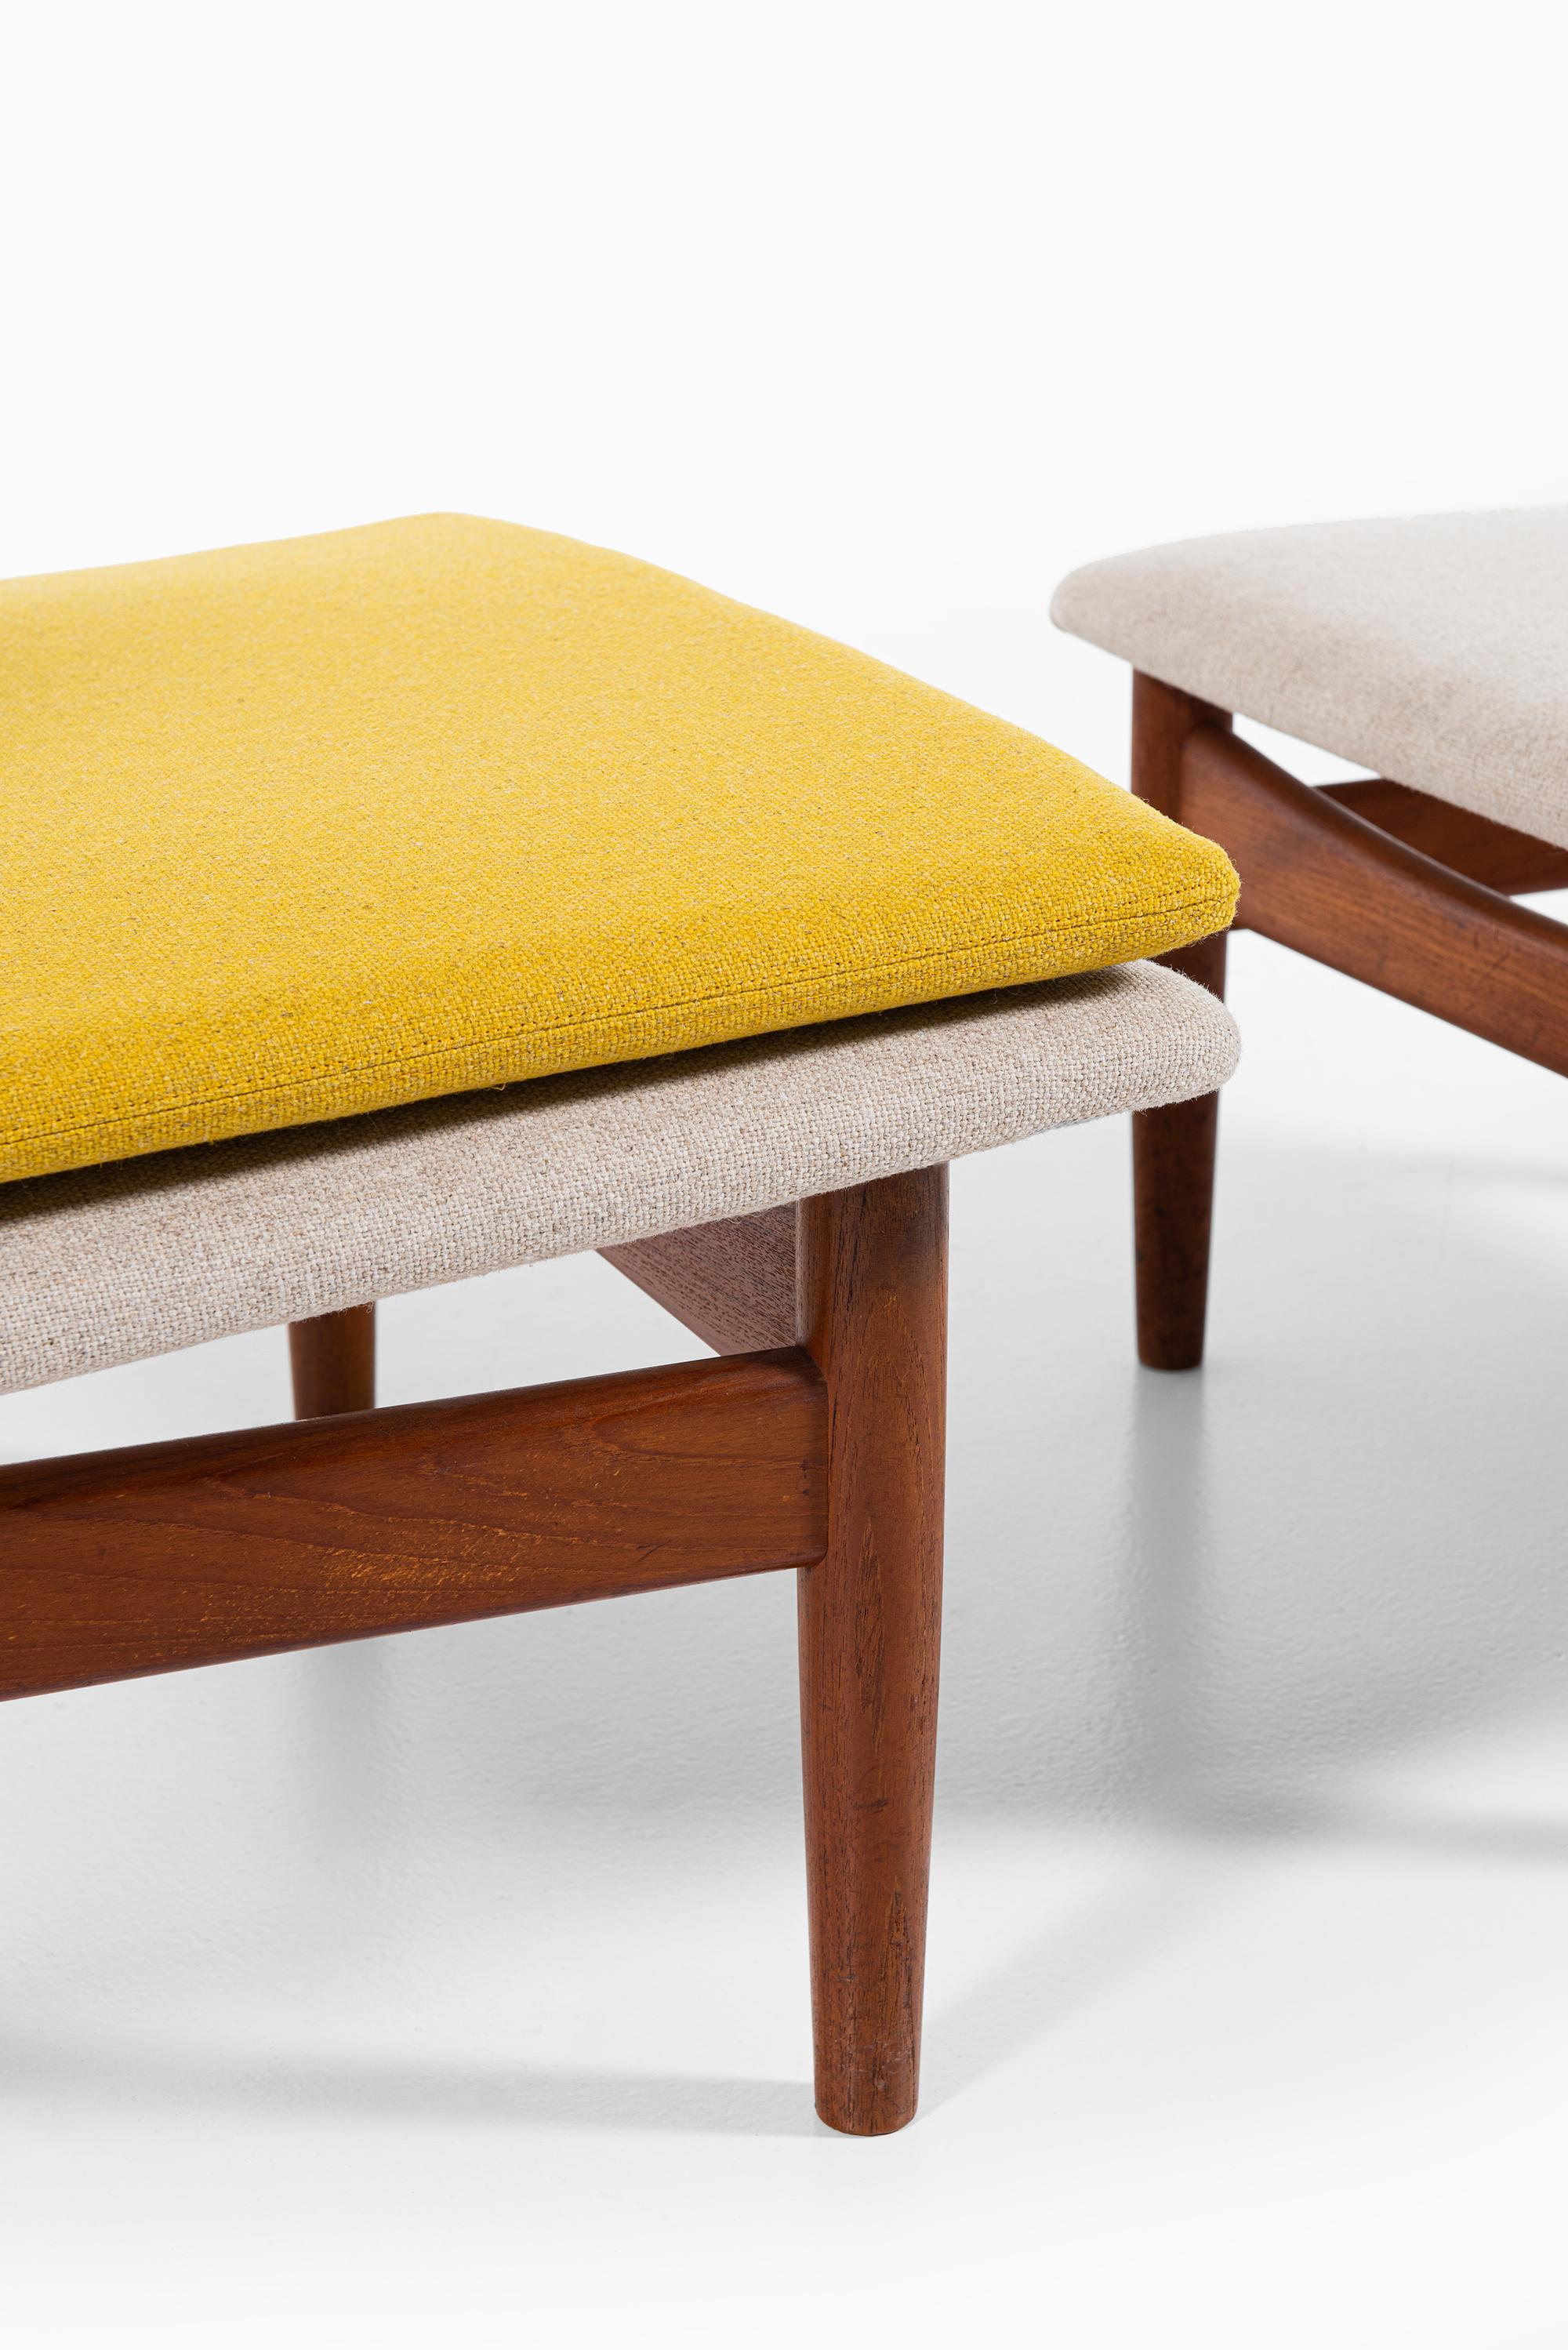 Fabric Finn Juhl Easy Chairs Model Japan Produced by France & Son in Denmark